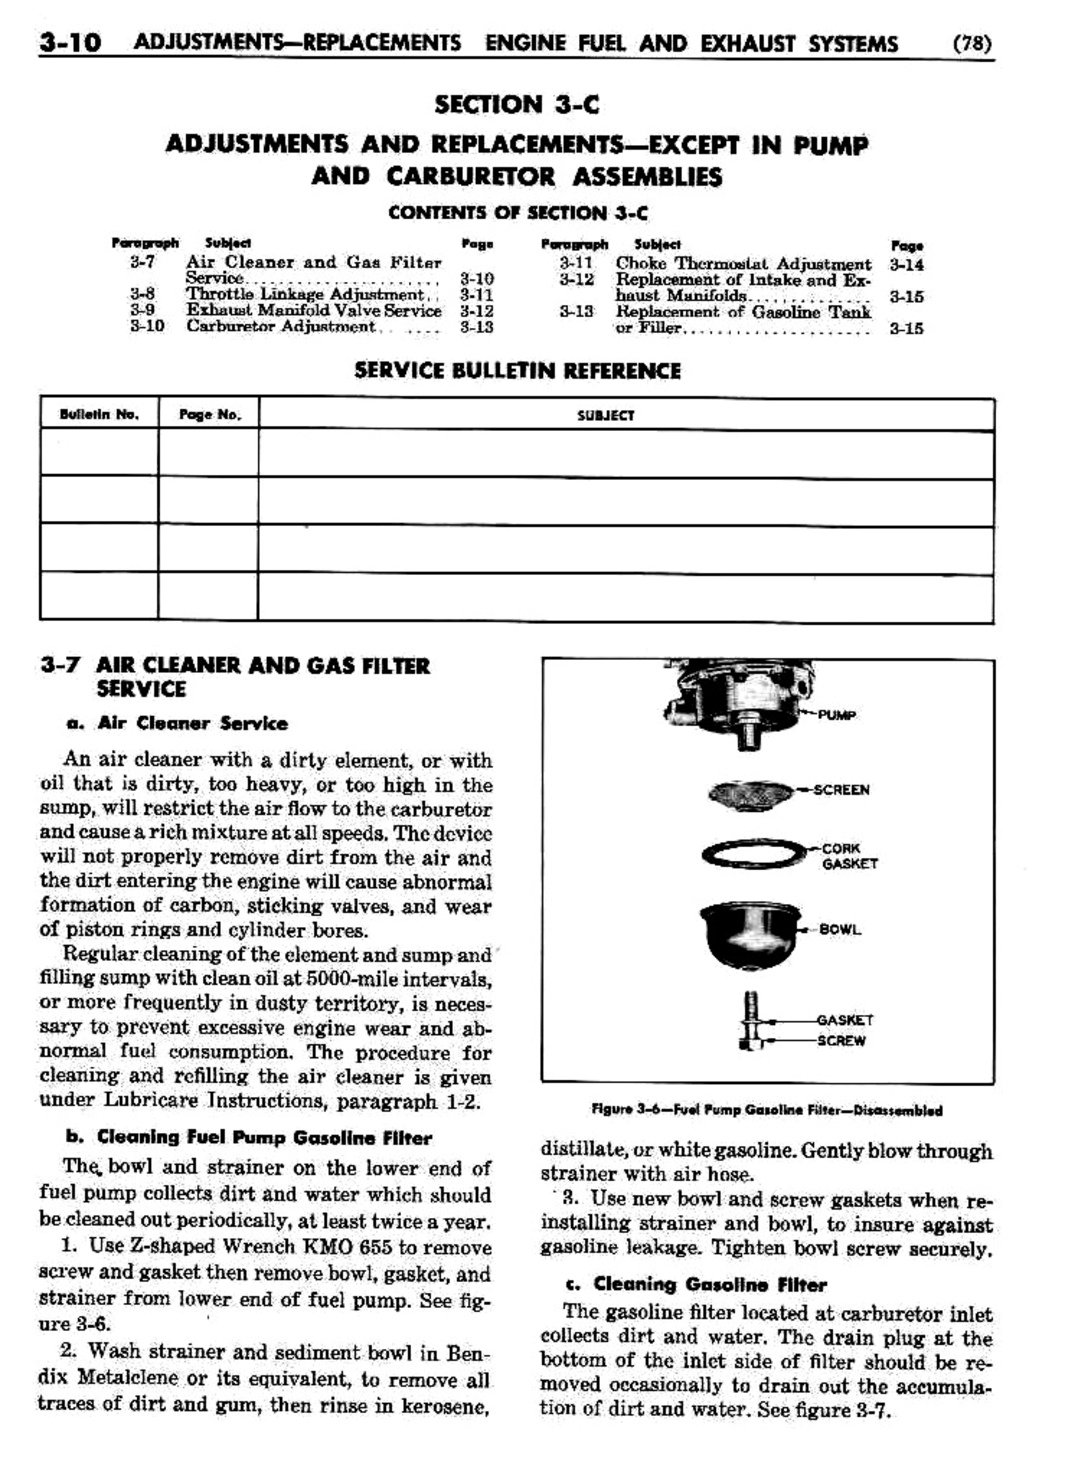 n_04 1951 Buick Shop Manual - Engine Fuel & Exhaust-010-010.jpg